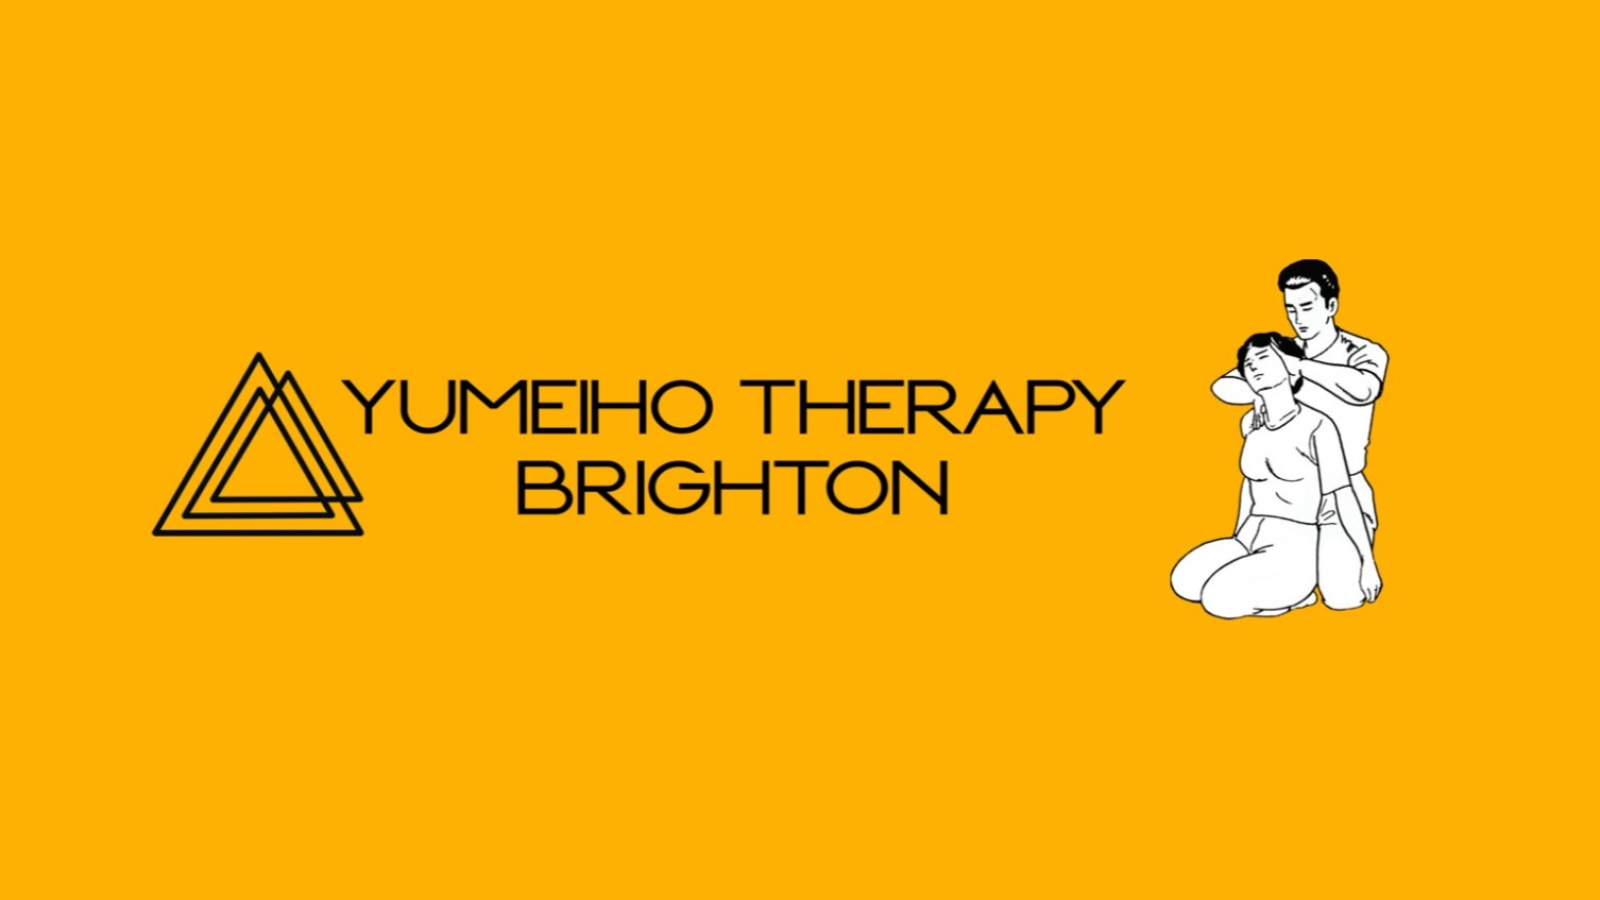 Yumeiho Therapy Brighton